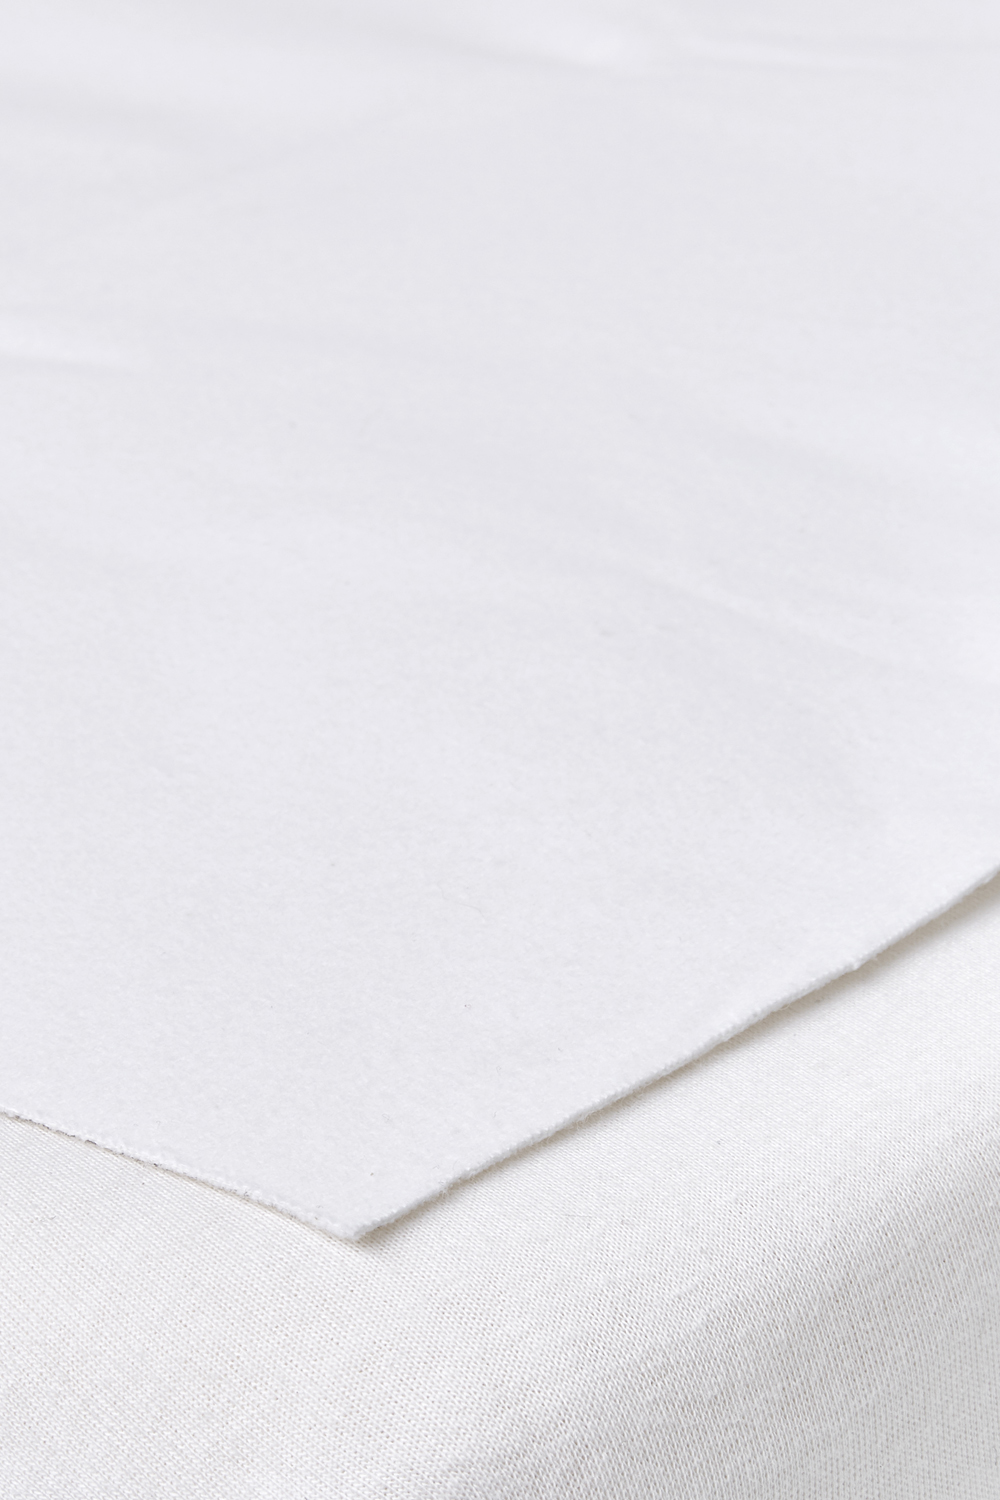 Waterproof sheet protector juniorbed - white - 75x100cm